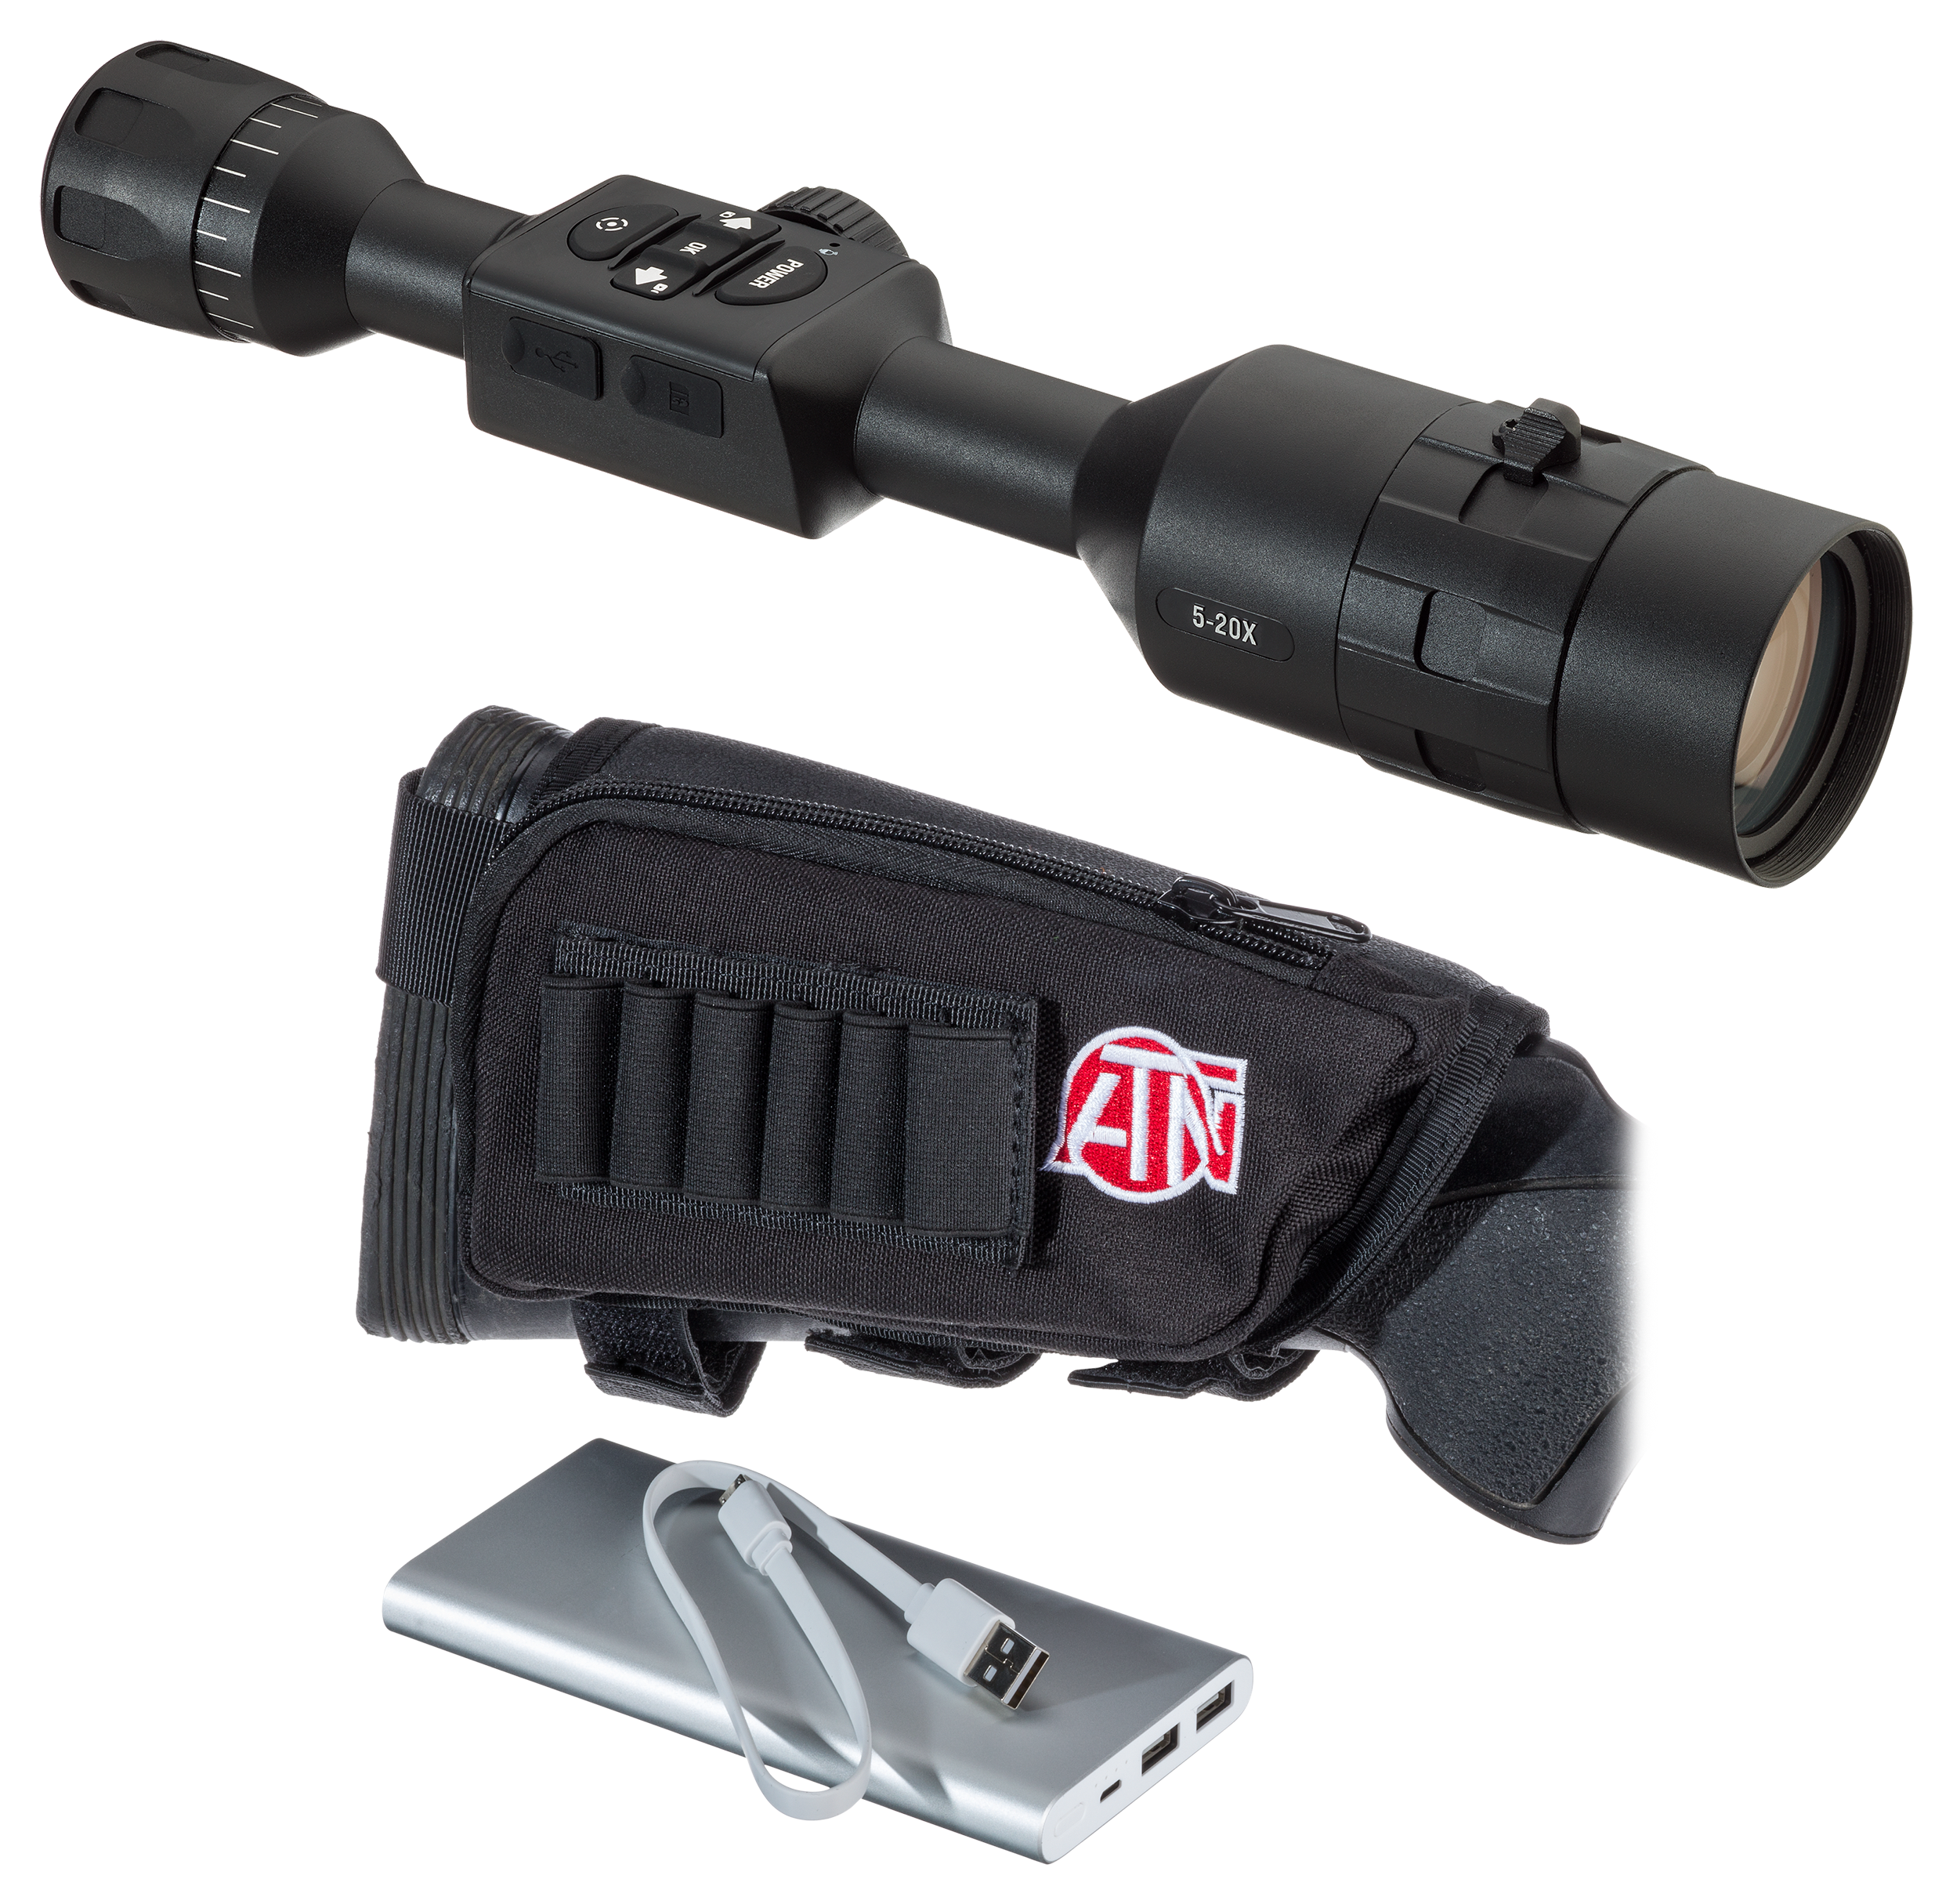 ATN X-Sight 4K Pro Day/Night Rifle Scope Kit - 3x-14x40mm